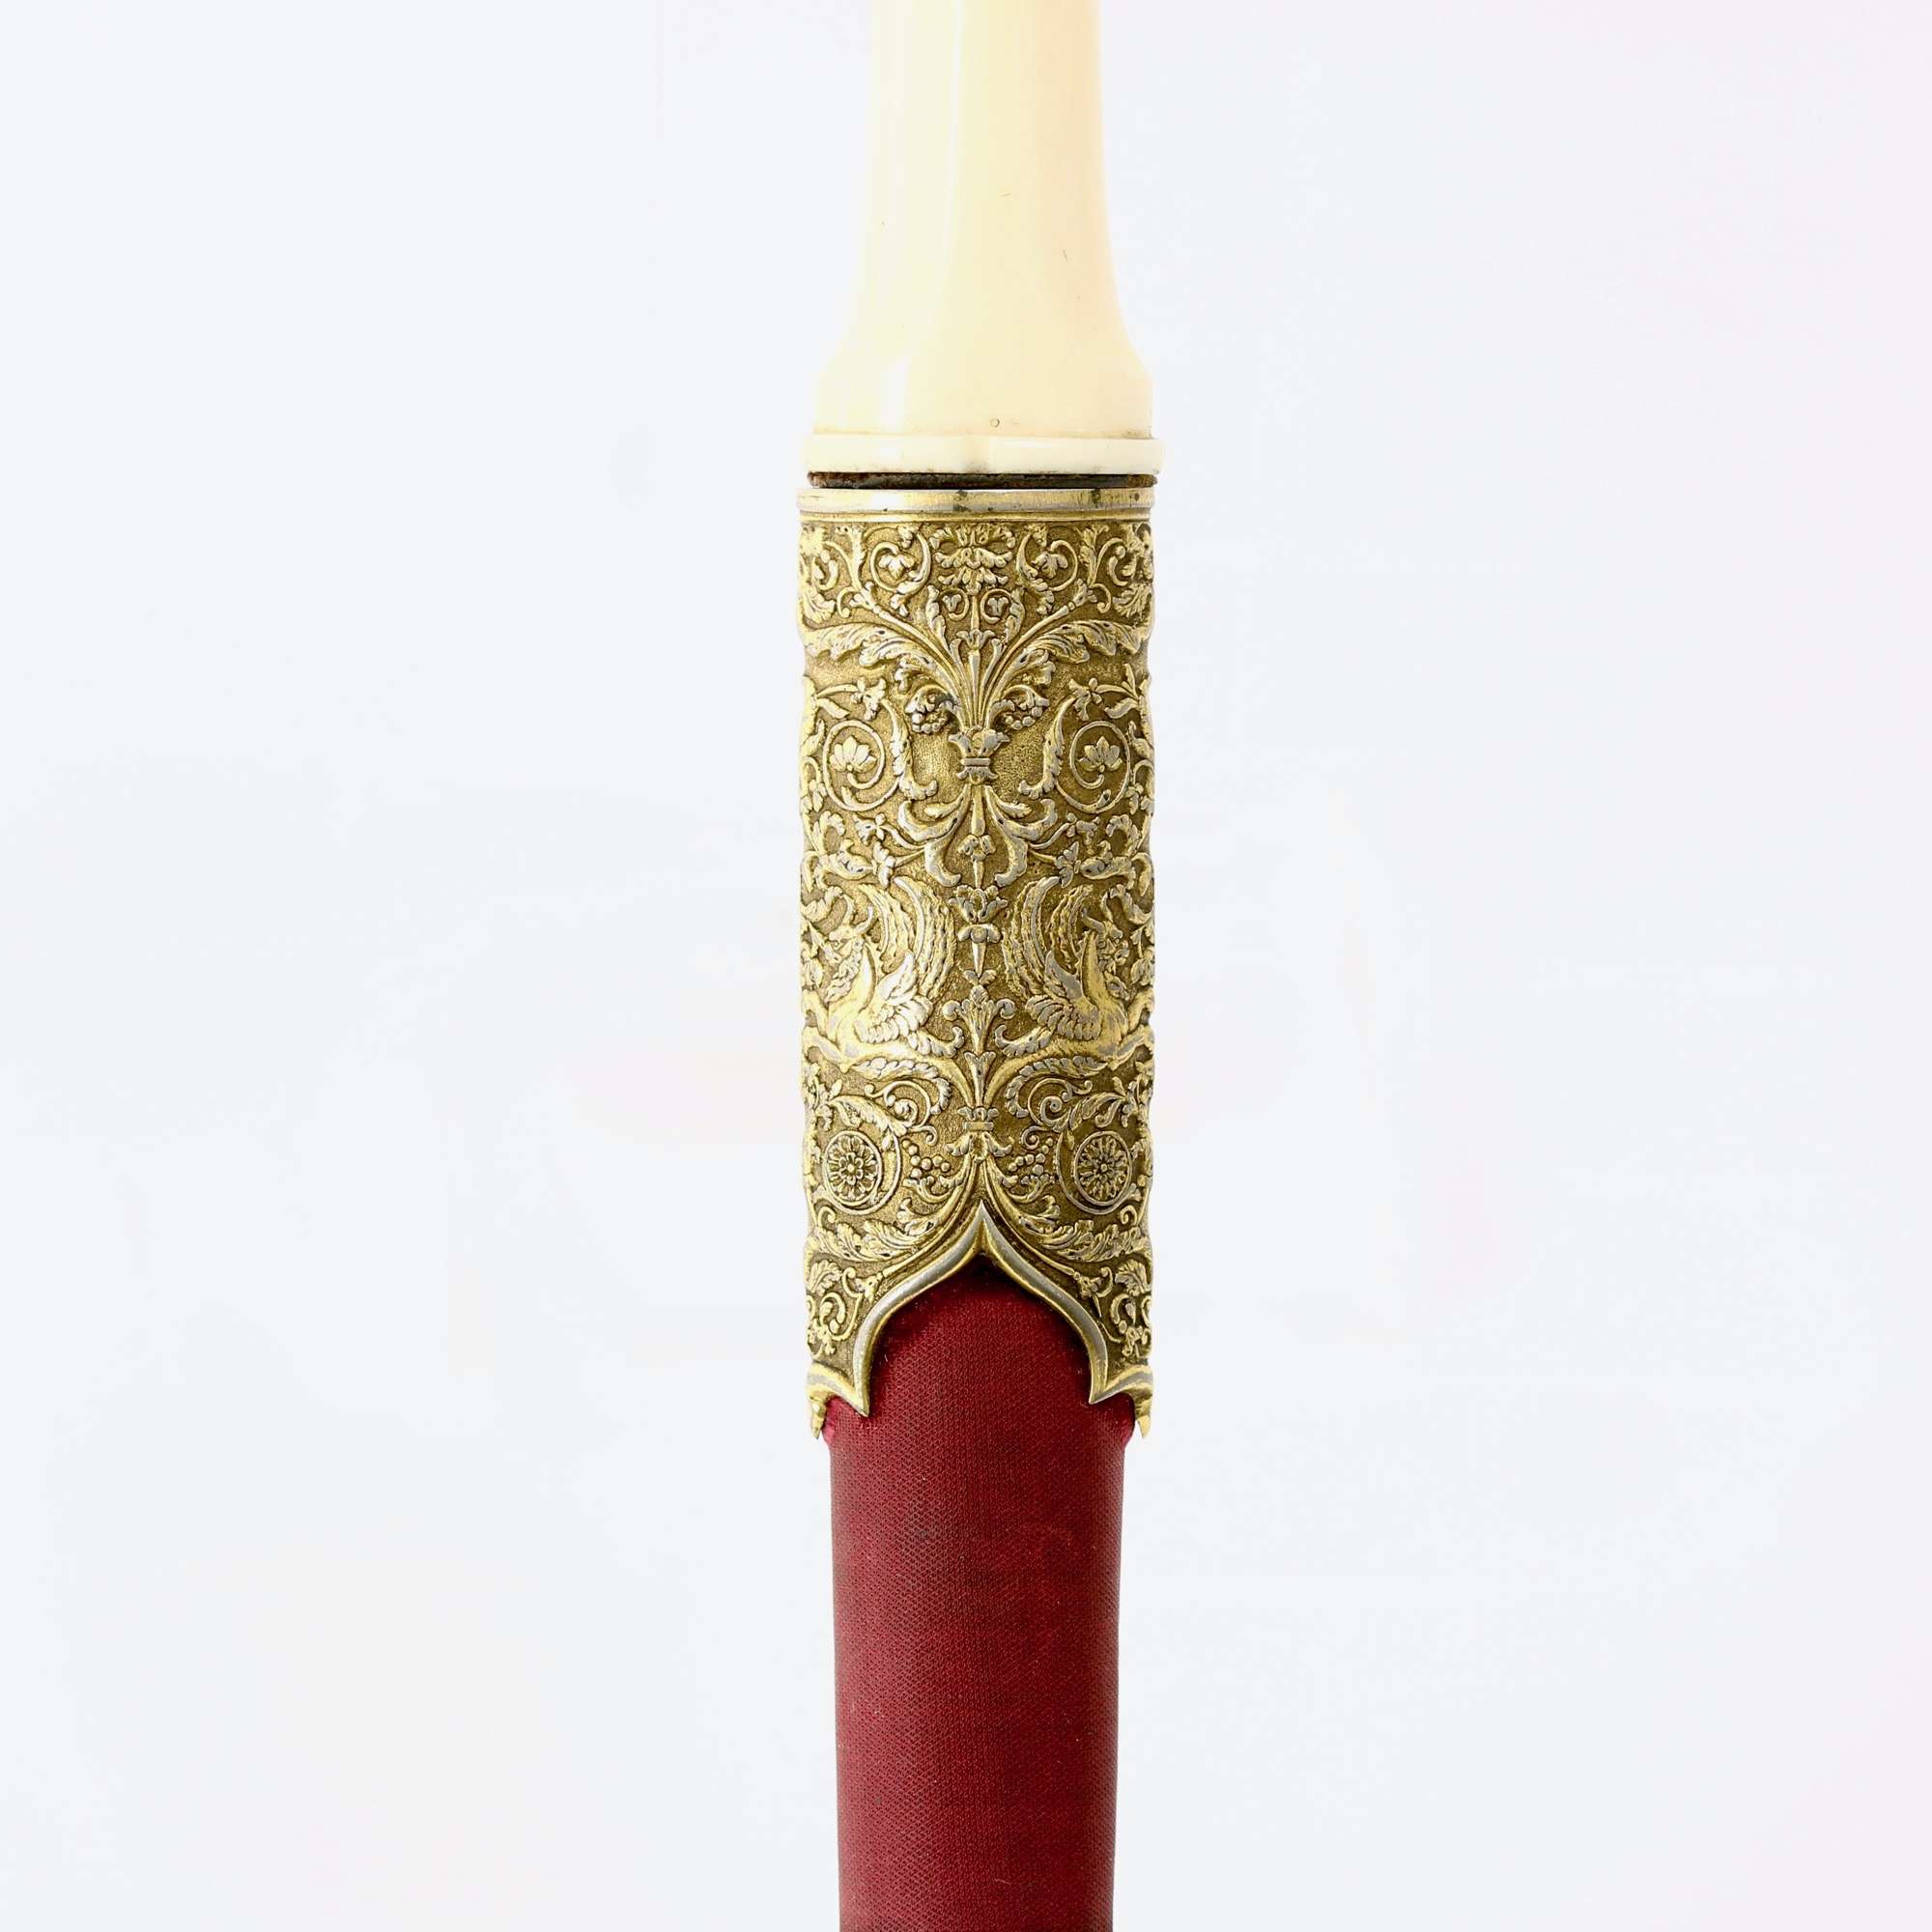 Ottoman court dagger with renaissance style decor